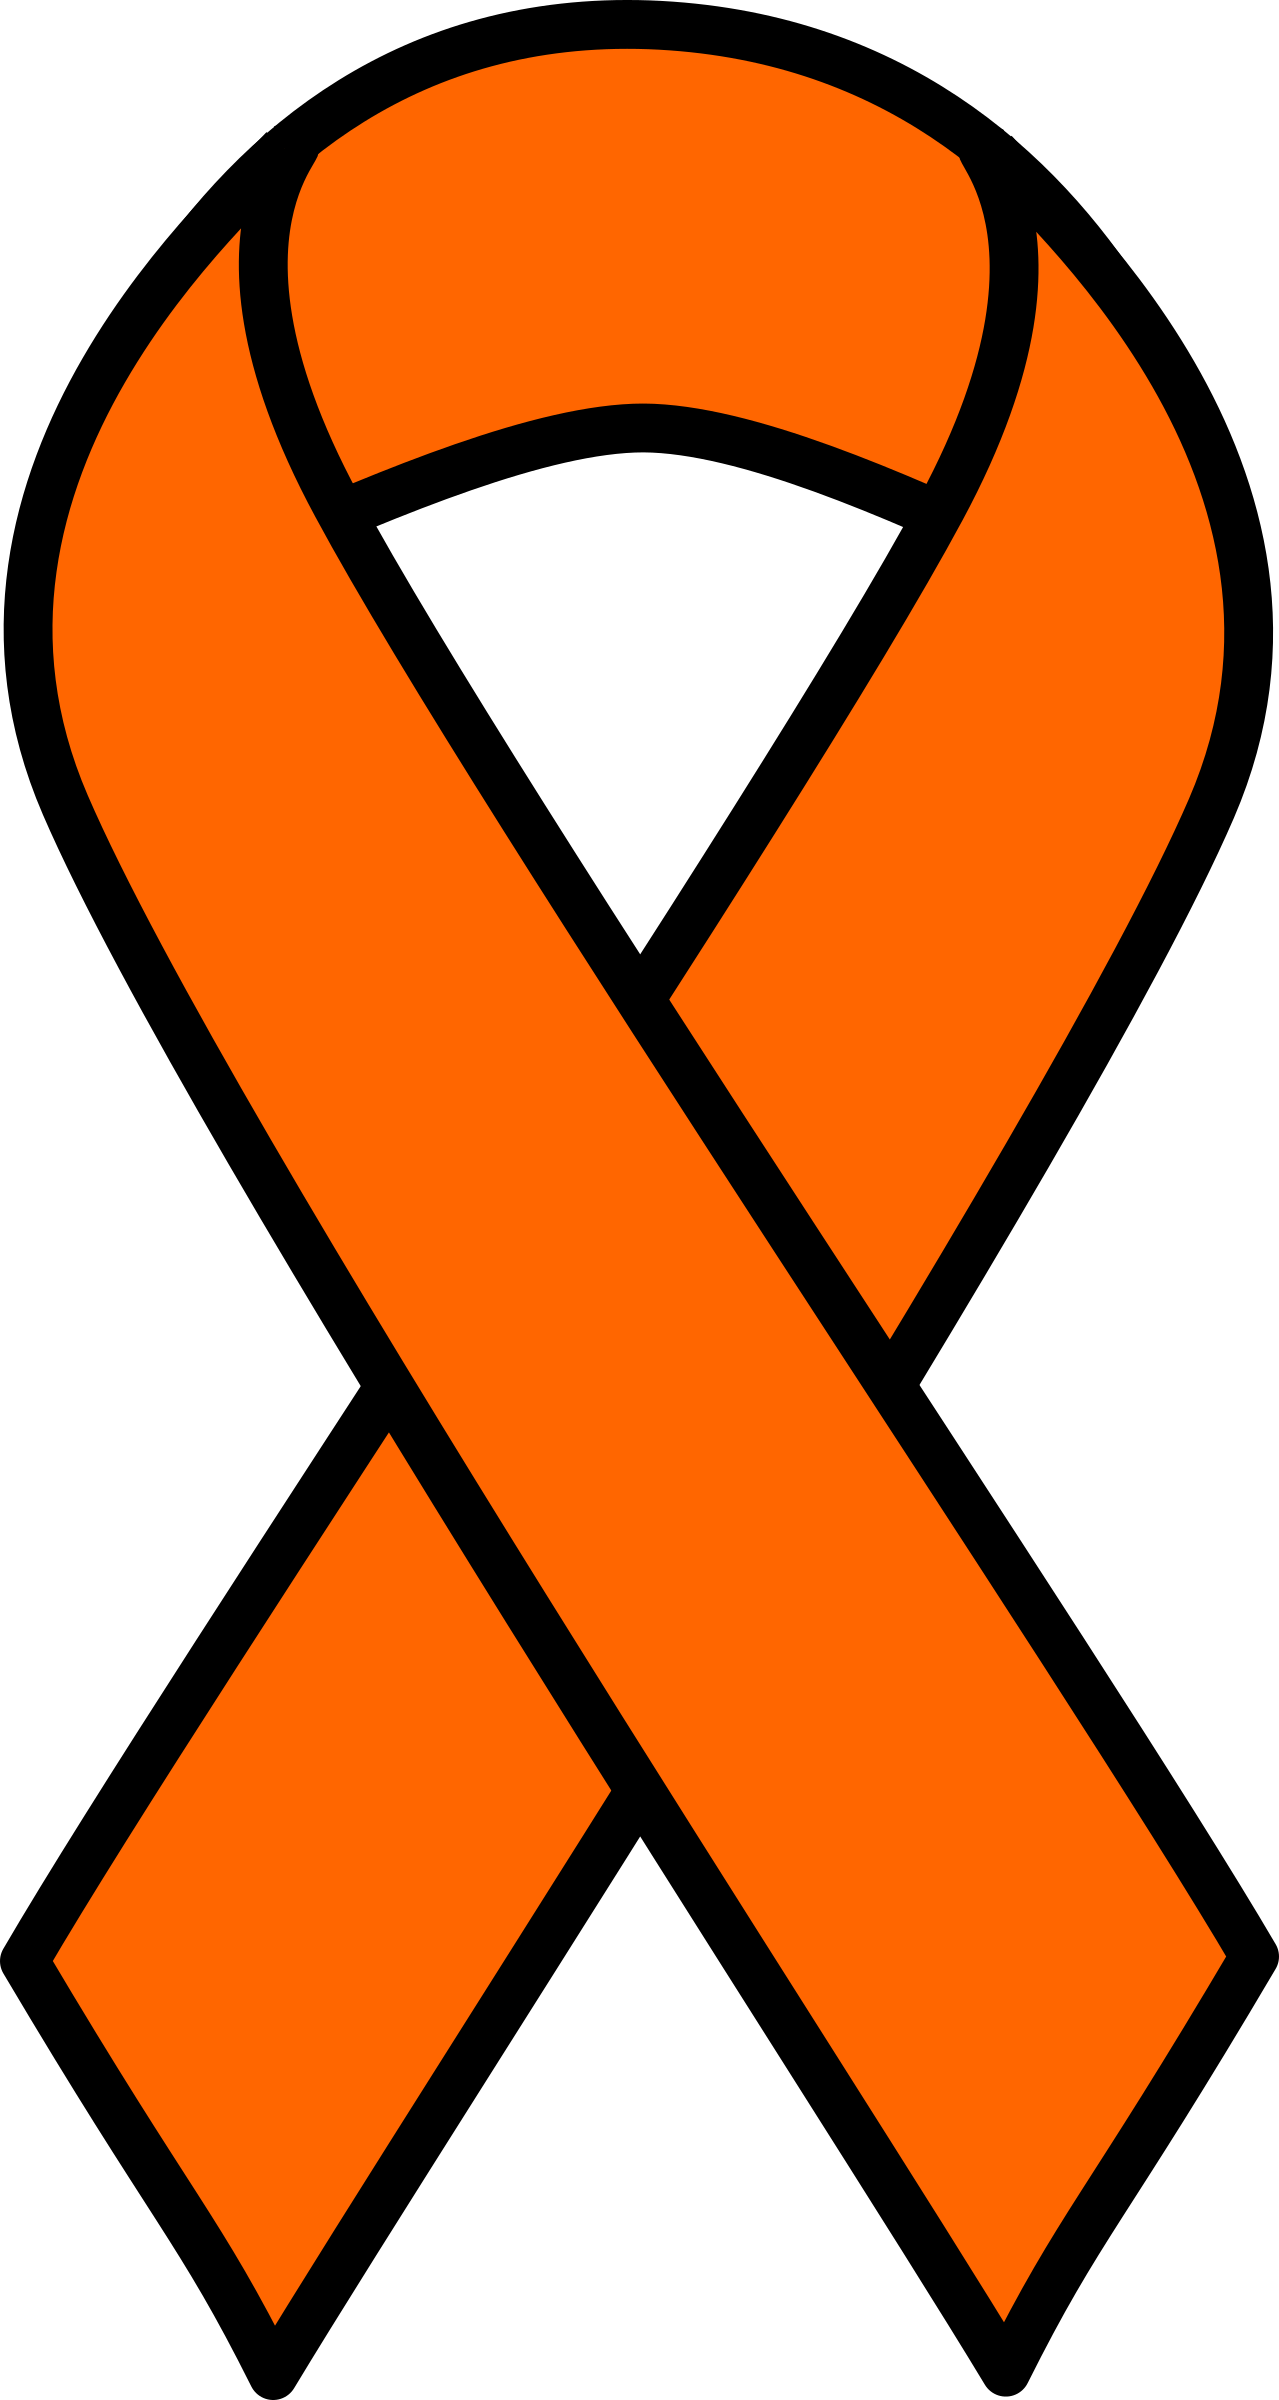 Clipart - Orange Kidney Cancer and Leukemia Ribbon